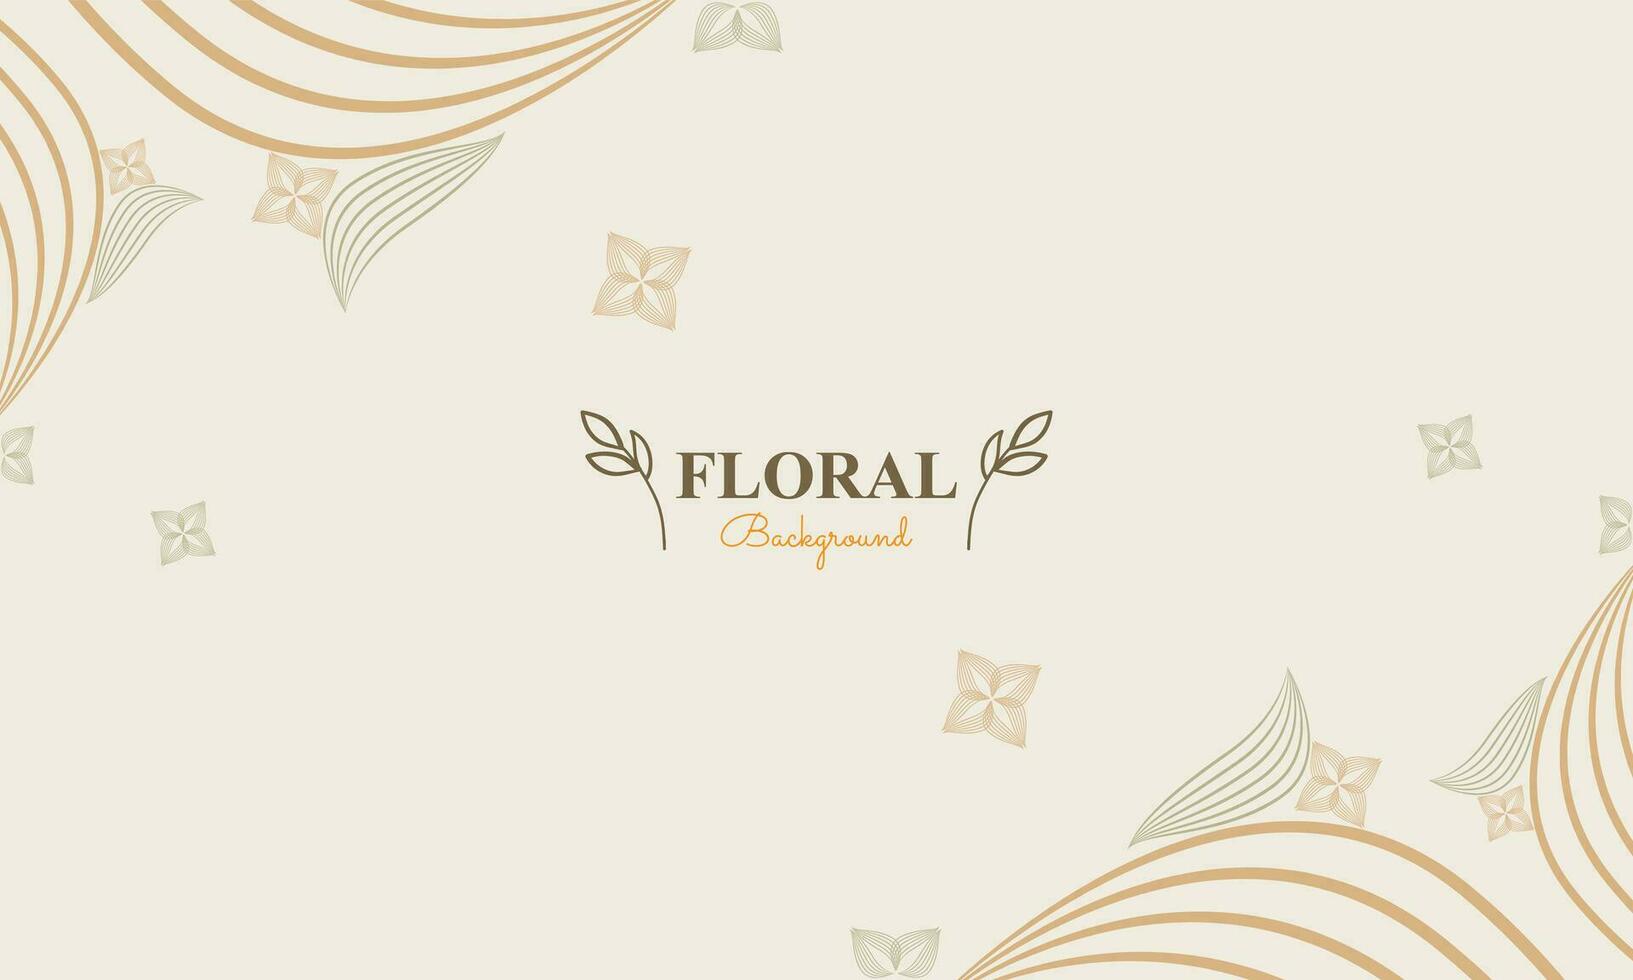 floral fundo com abstrato natural forma, folha e floral enfeite dentro suave pastel cor estilo vetor